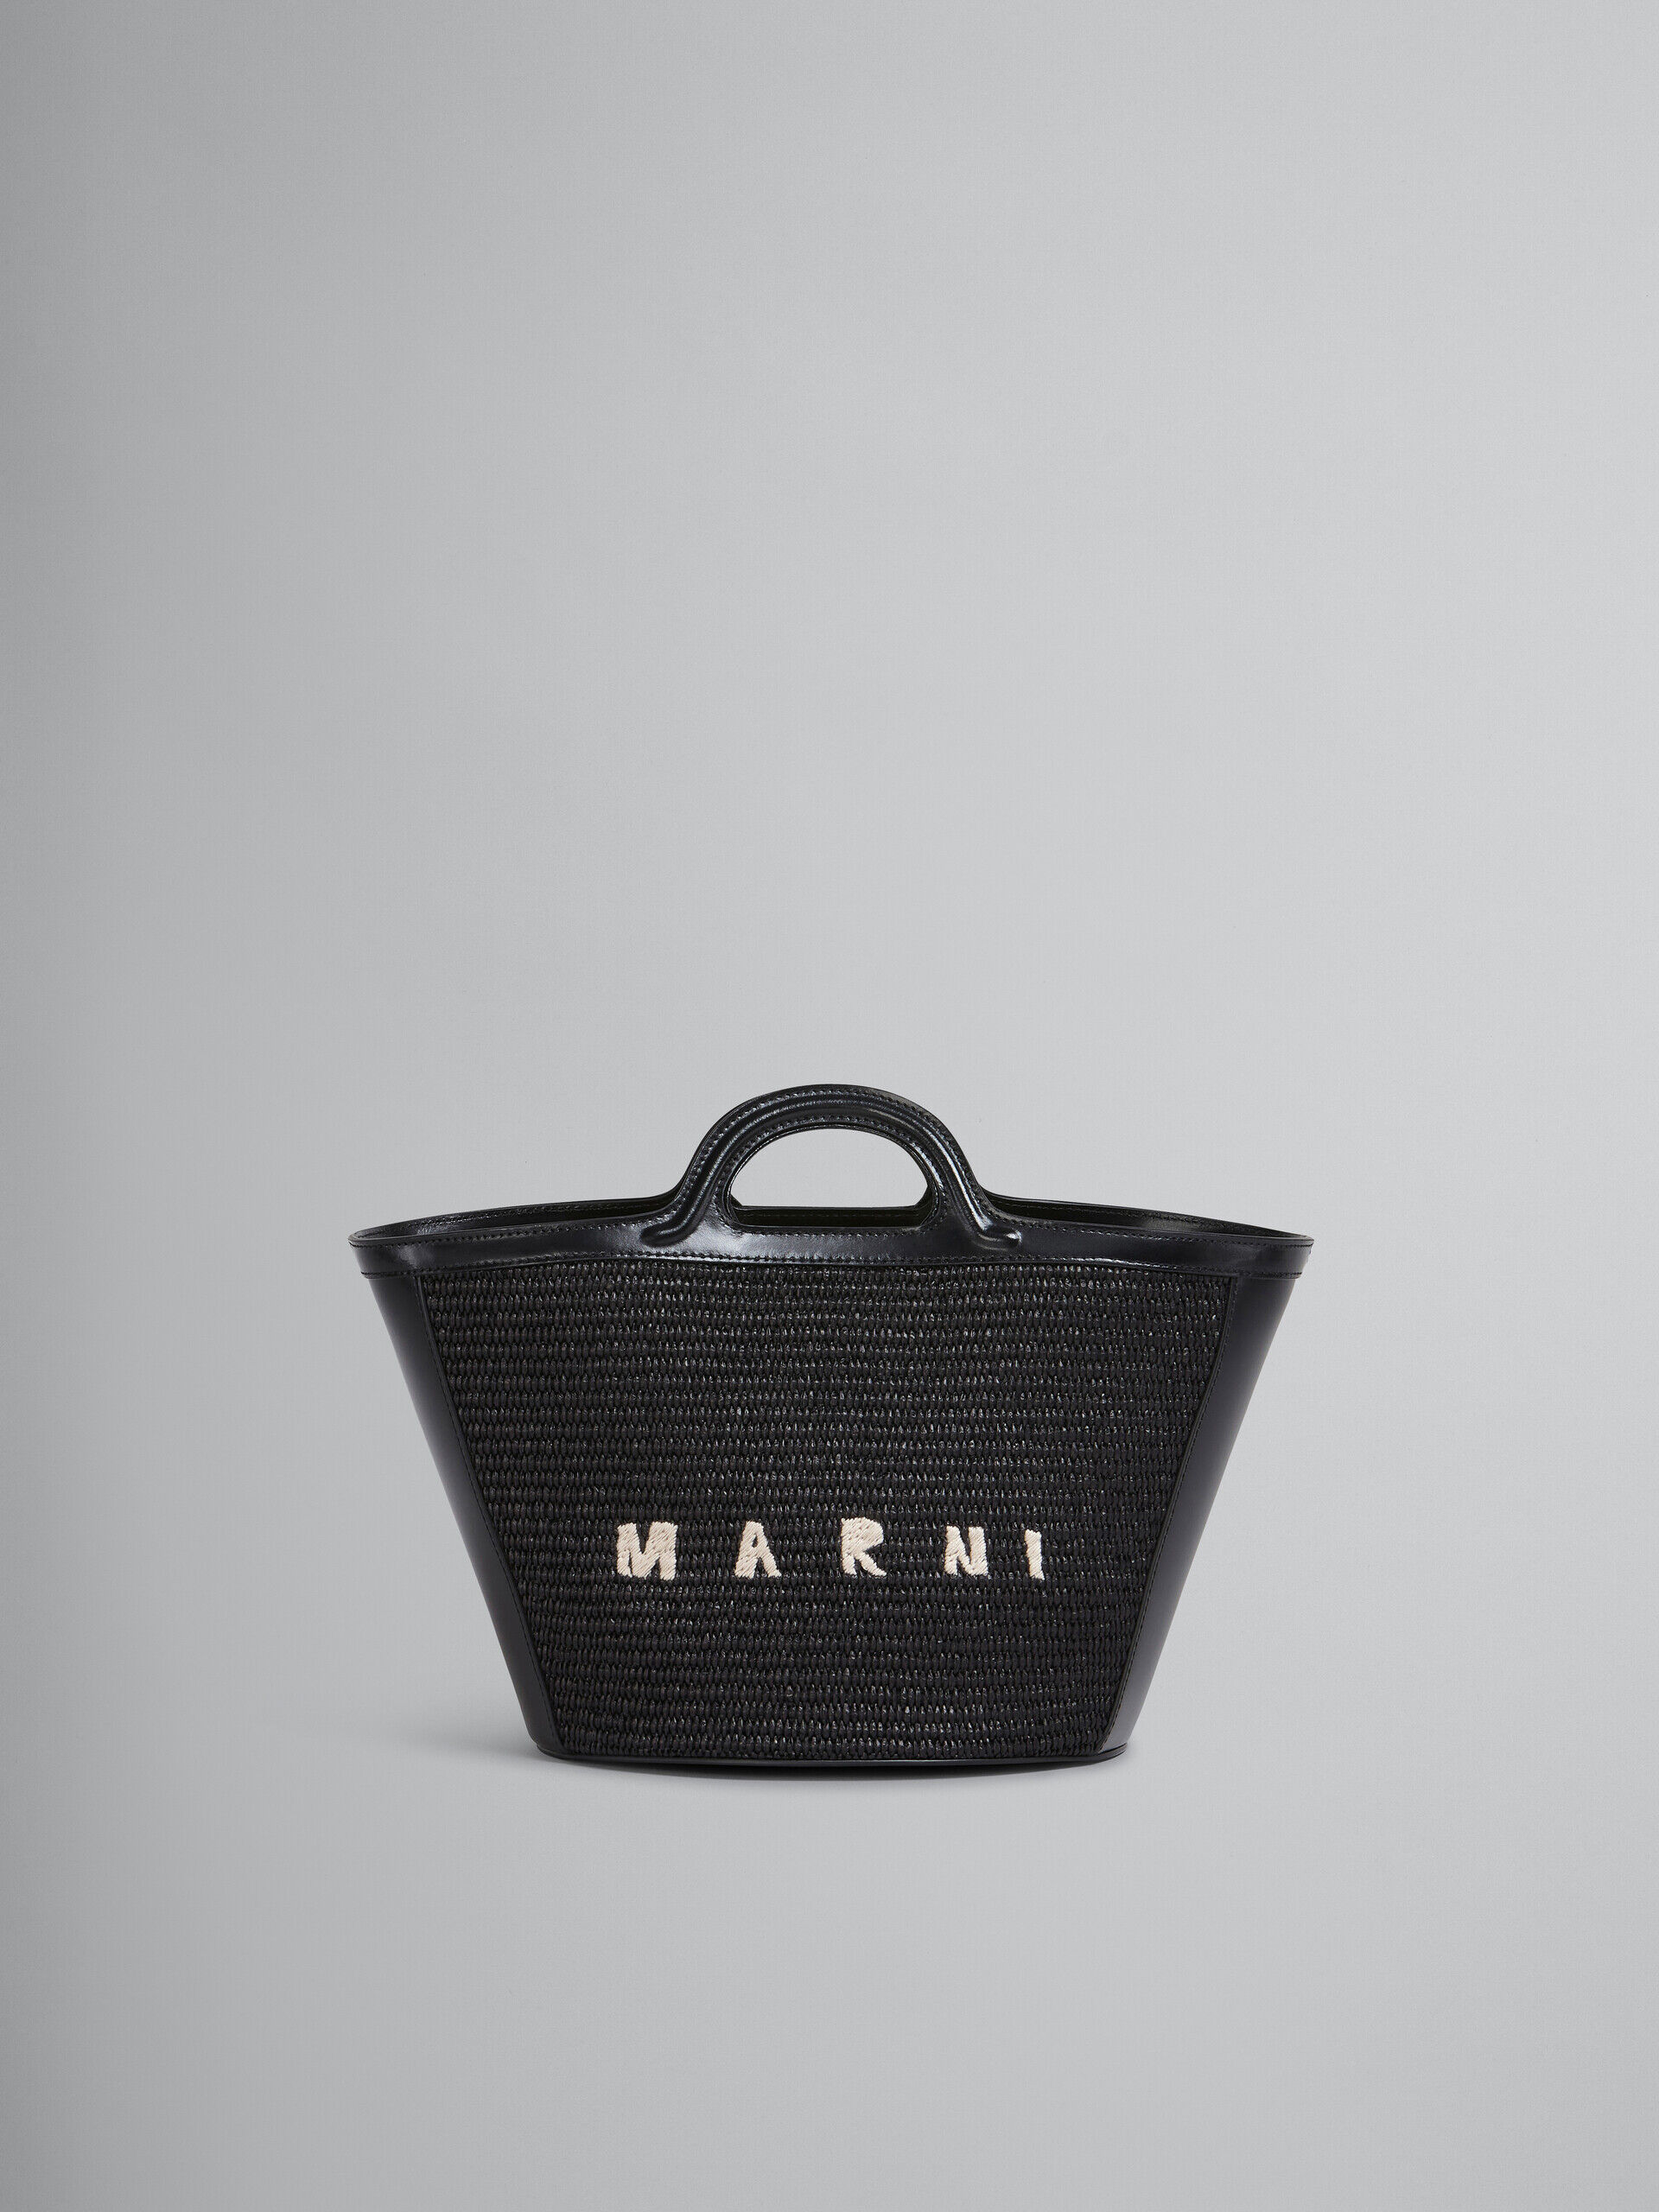 Tropicalia Small Bag in black leather and raffia-effect fabric | Marni